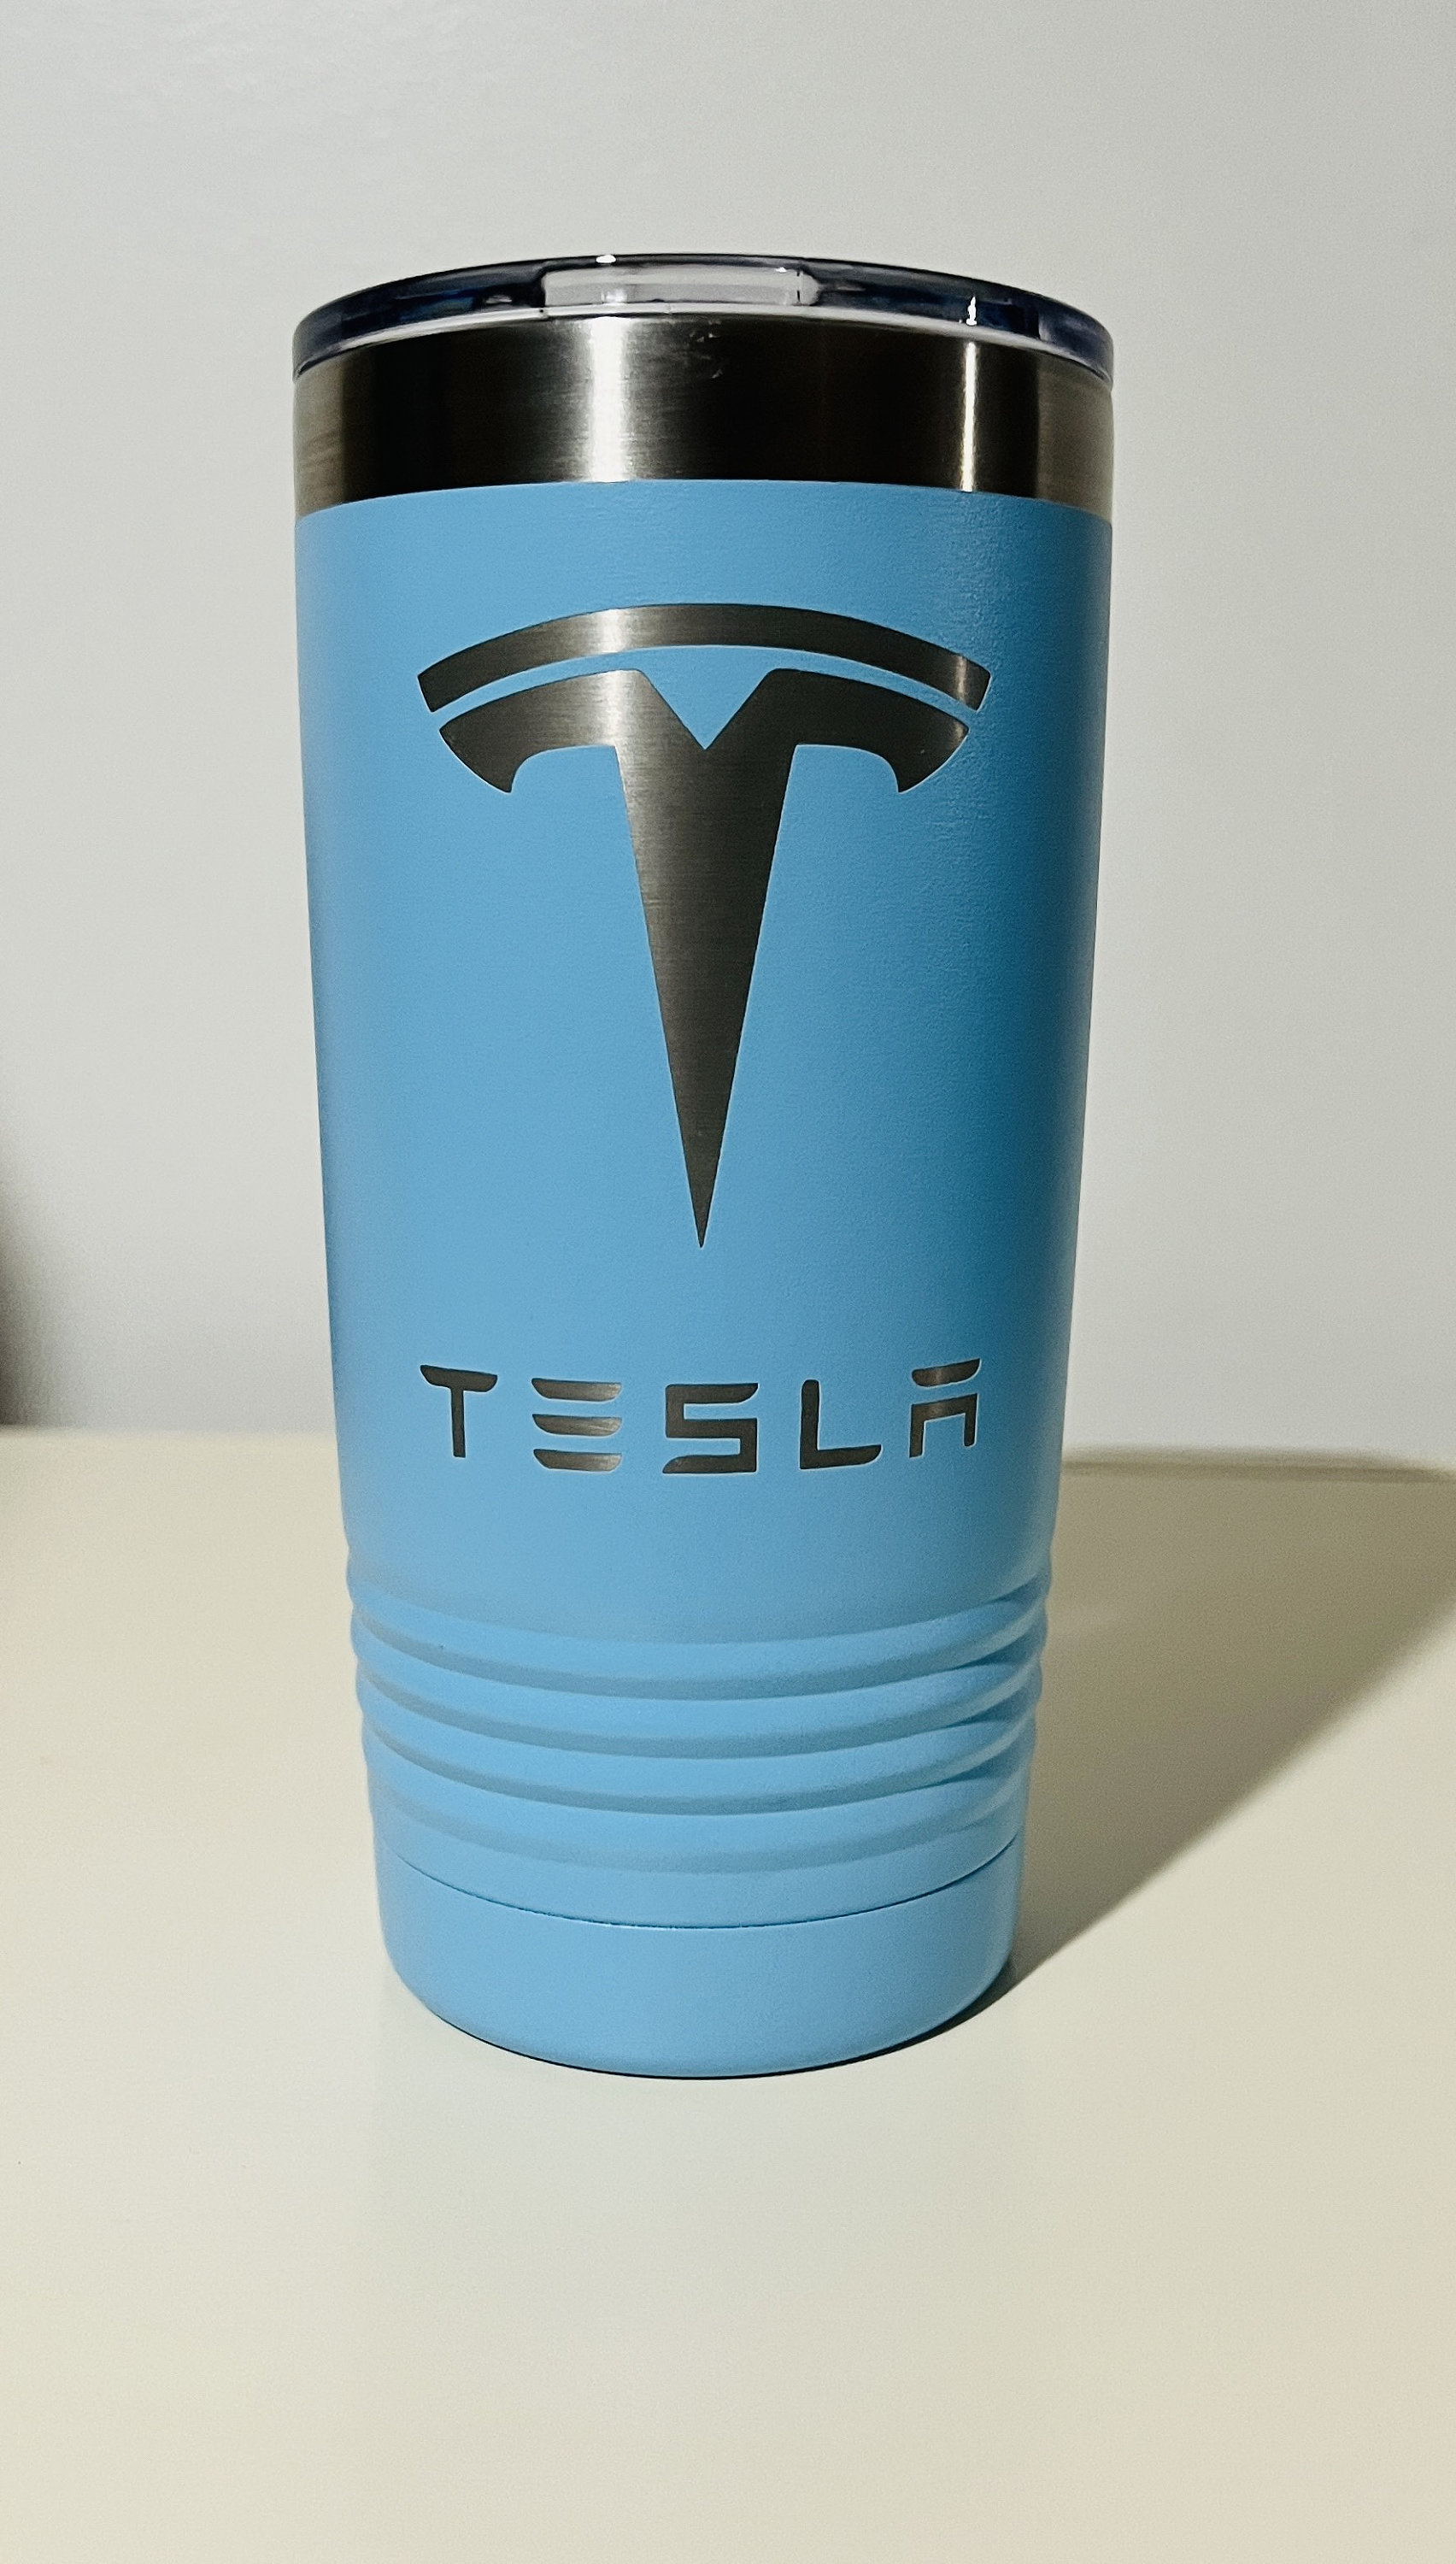 High-tech Tesla Friendly lidded coffee tumbler from TeslaChick